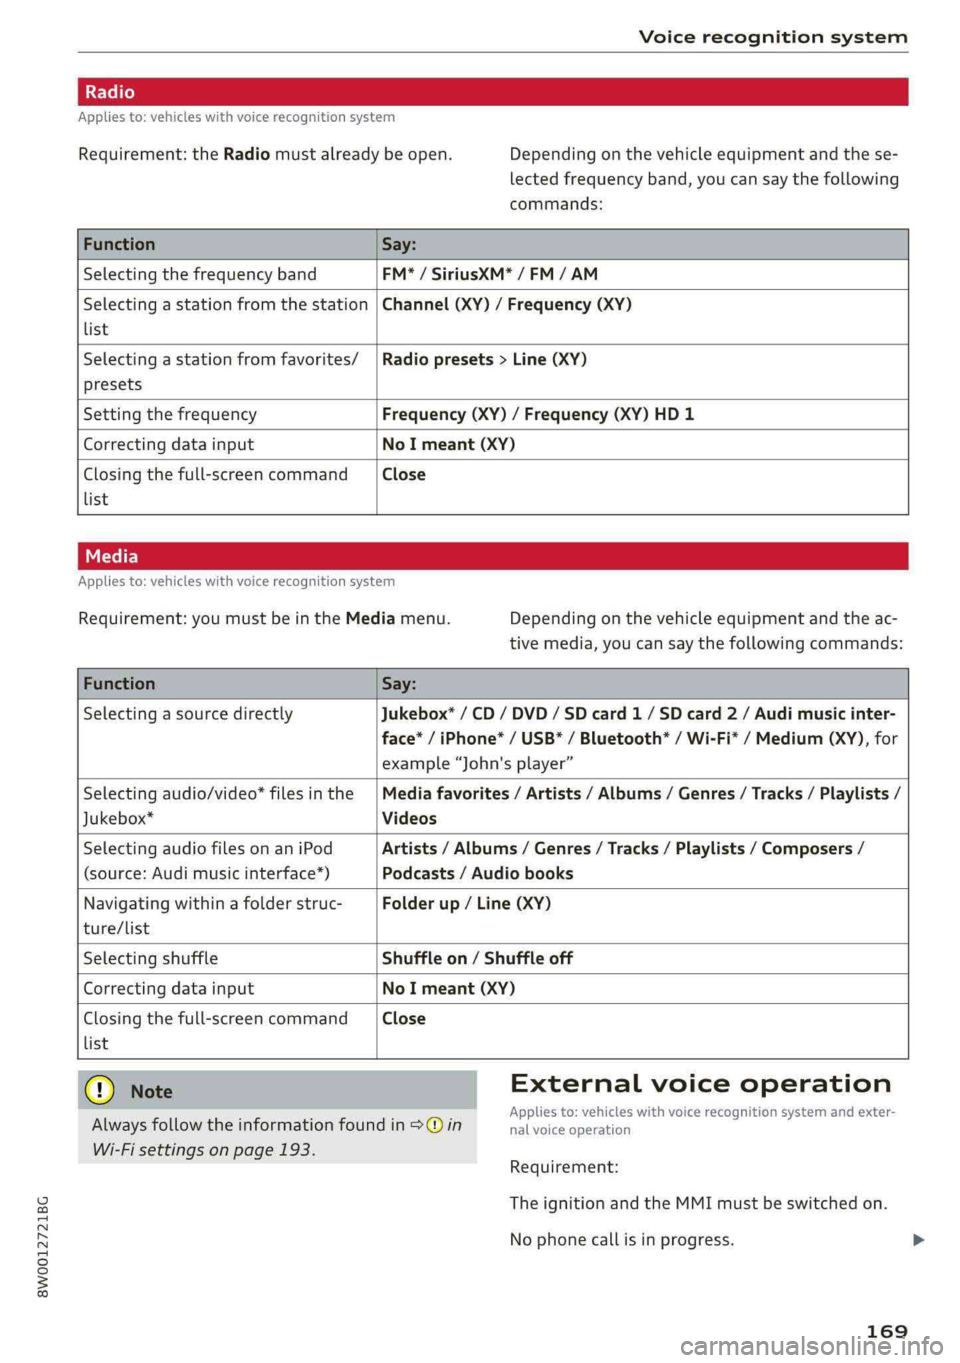 AUDI S4 2019  Owners Manual 8W0012721BG
Voicerecognitionsystem
Appliesto:vehicleswithvoicerecognitionsystem
 
          
Requirement:theRadiomustalreadybeopen.Depending onthevehicleequipmentandthese-
lectedfrequencyband,youcansa